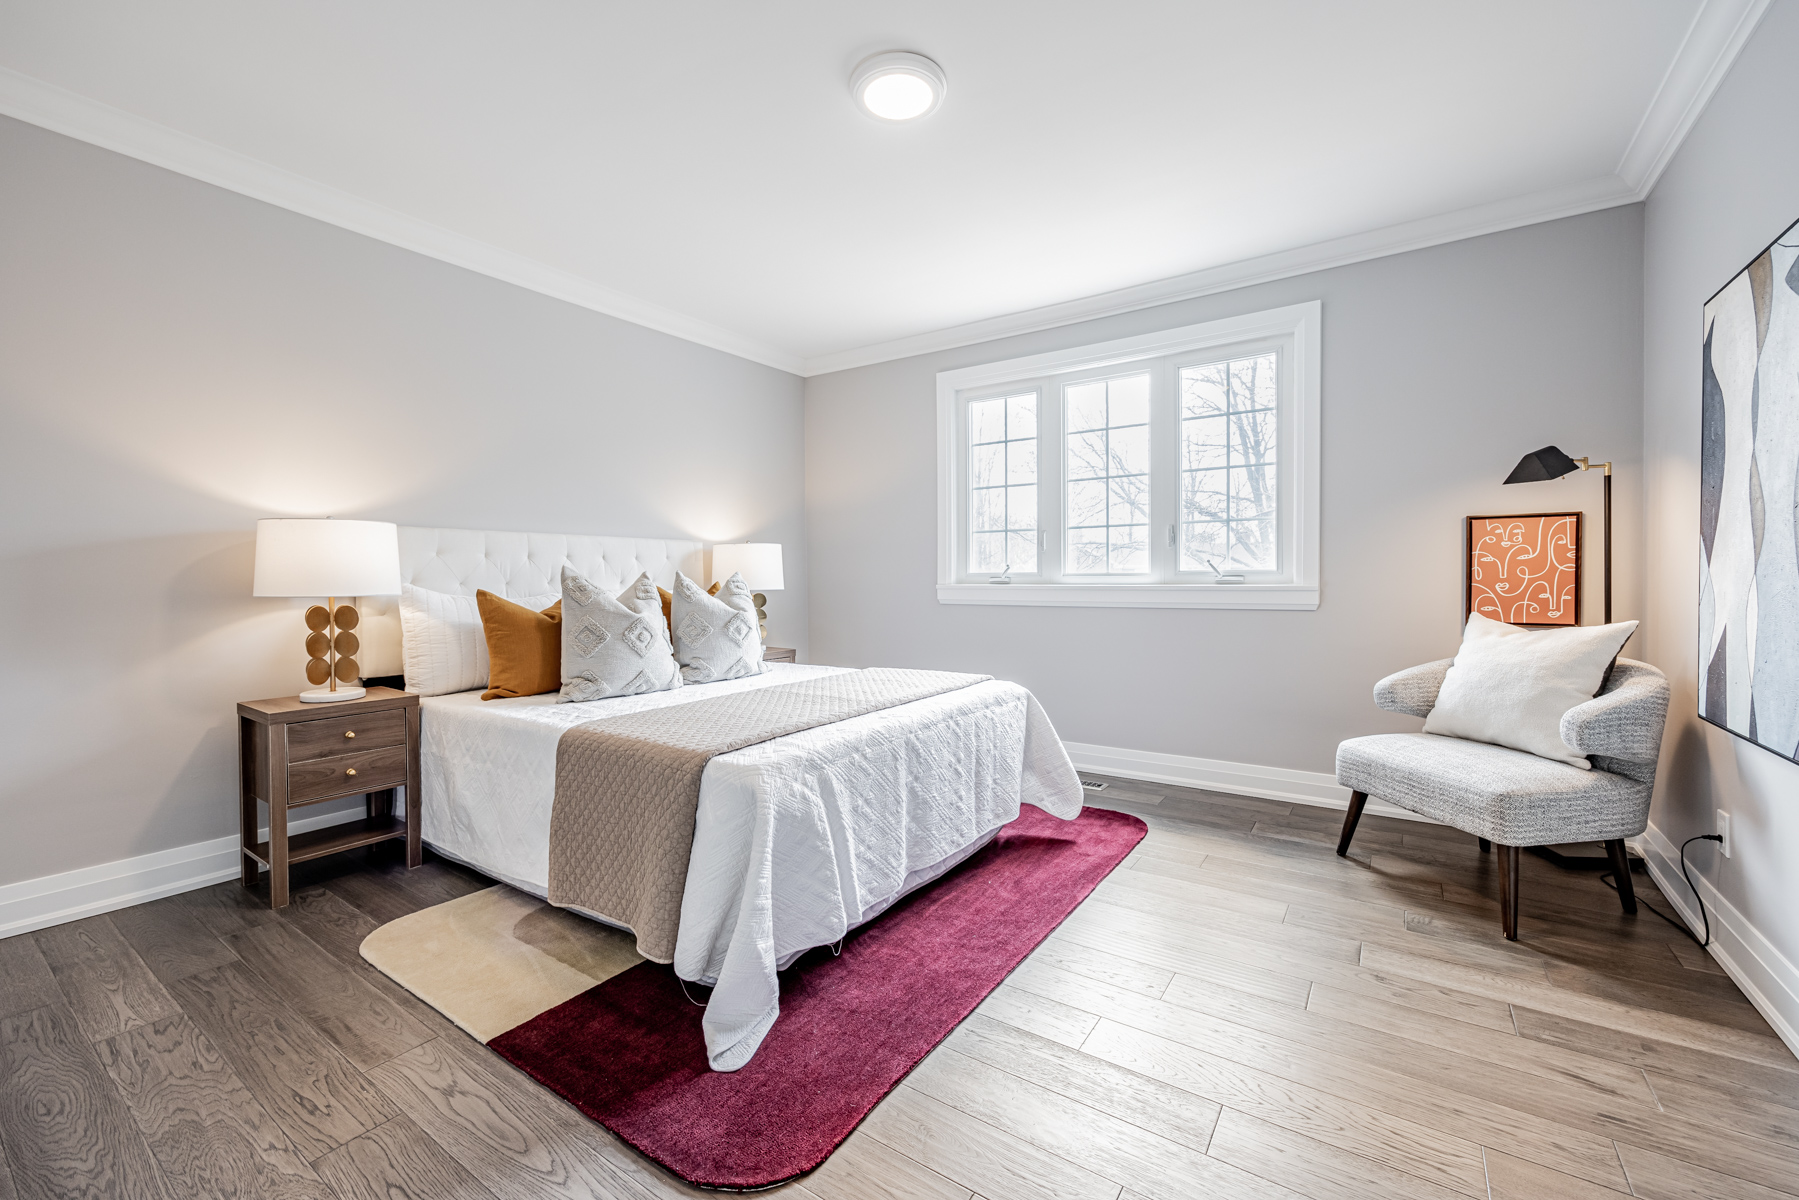 Large bedroom with hardwood floors, gray walls & casement windows.